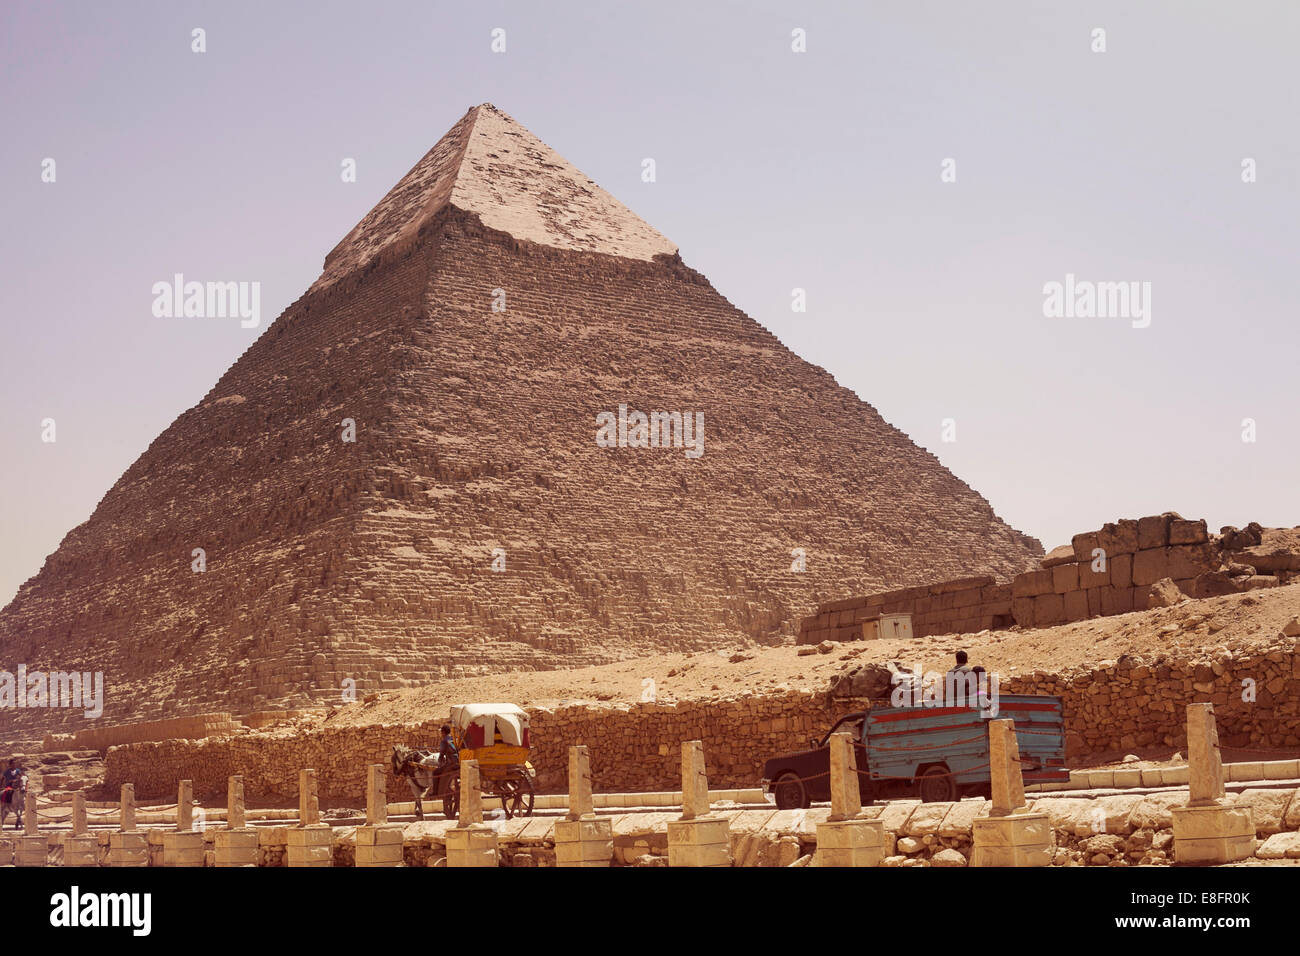 Pyramide de Khafra, Giza, Égypte Banque D'Images